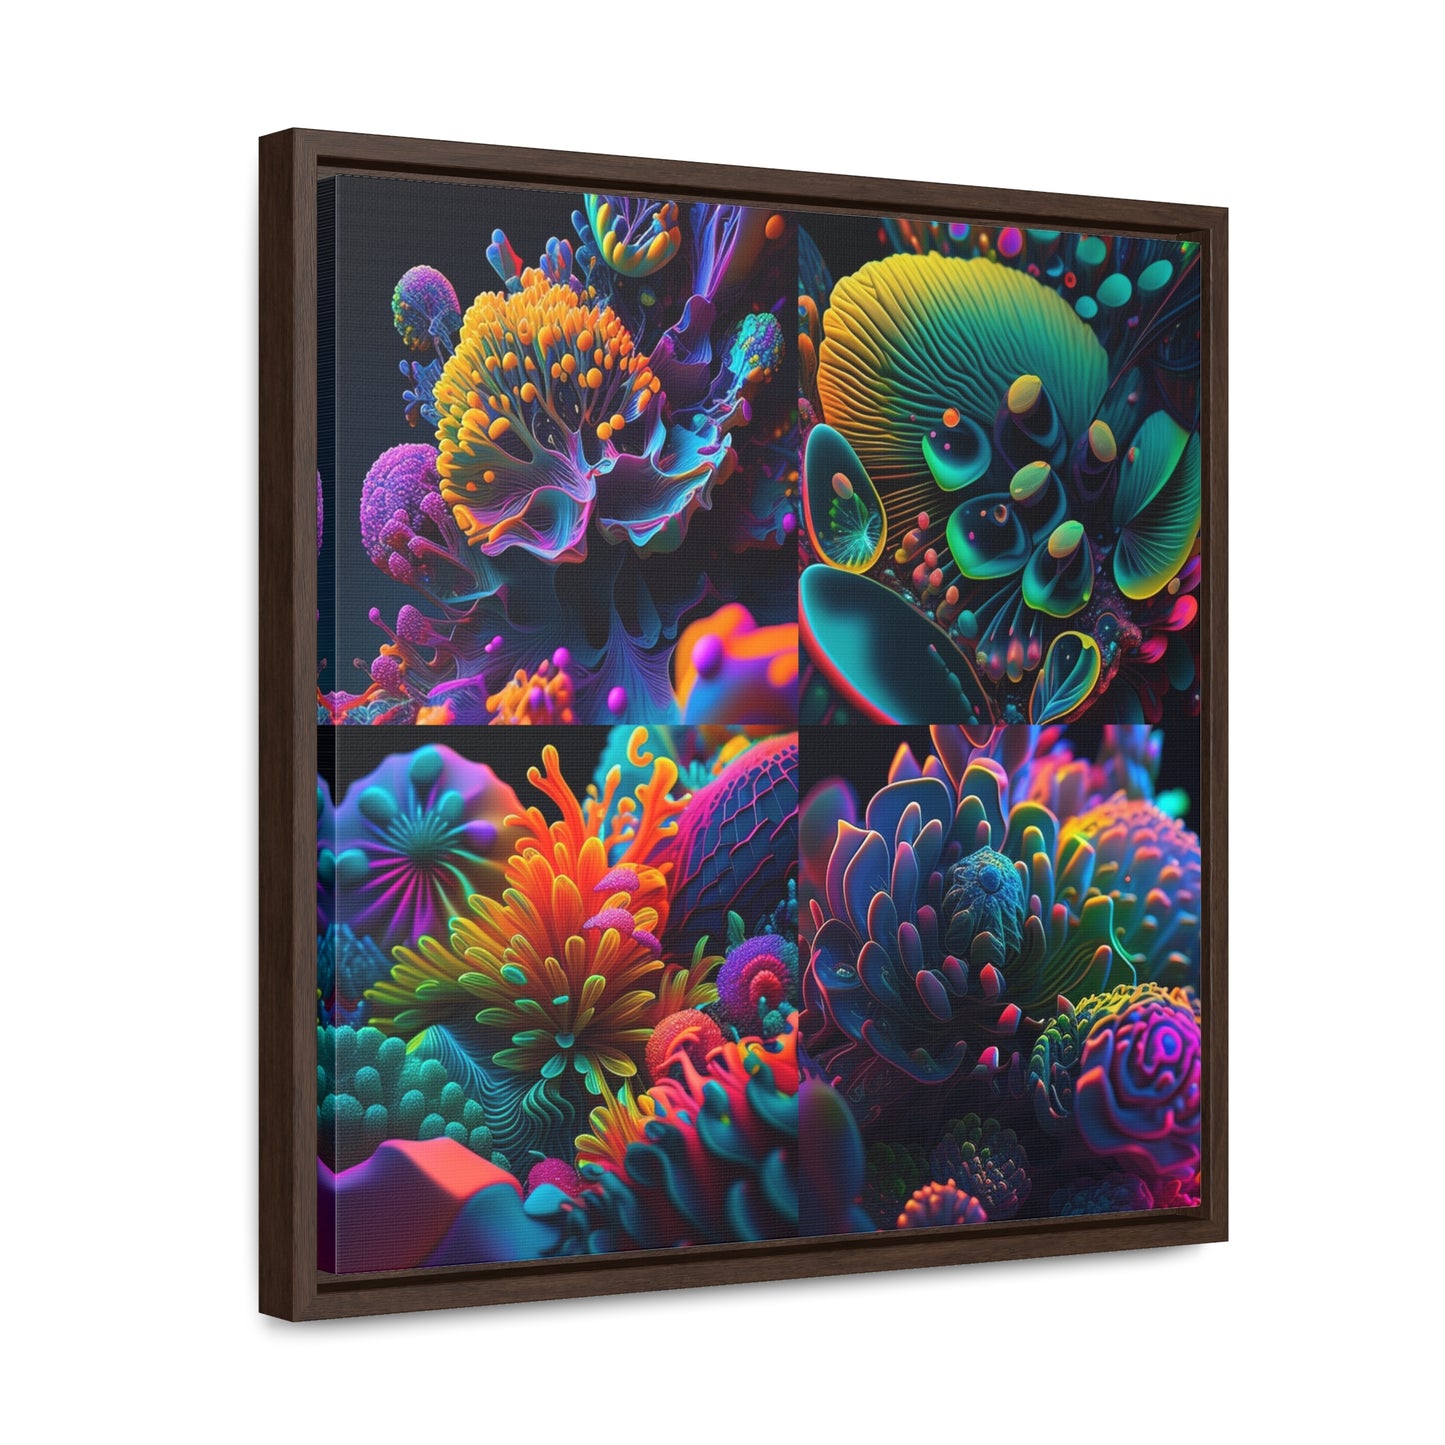 Gallery Canvas Wraps, Square Frame Ocean Life Macro 5